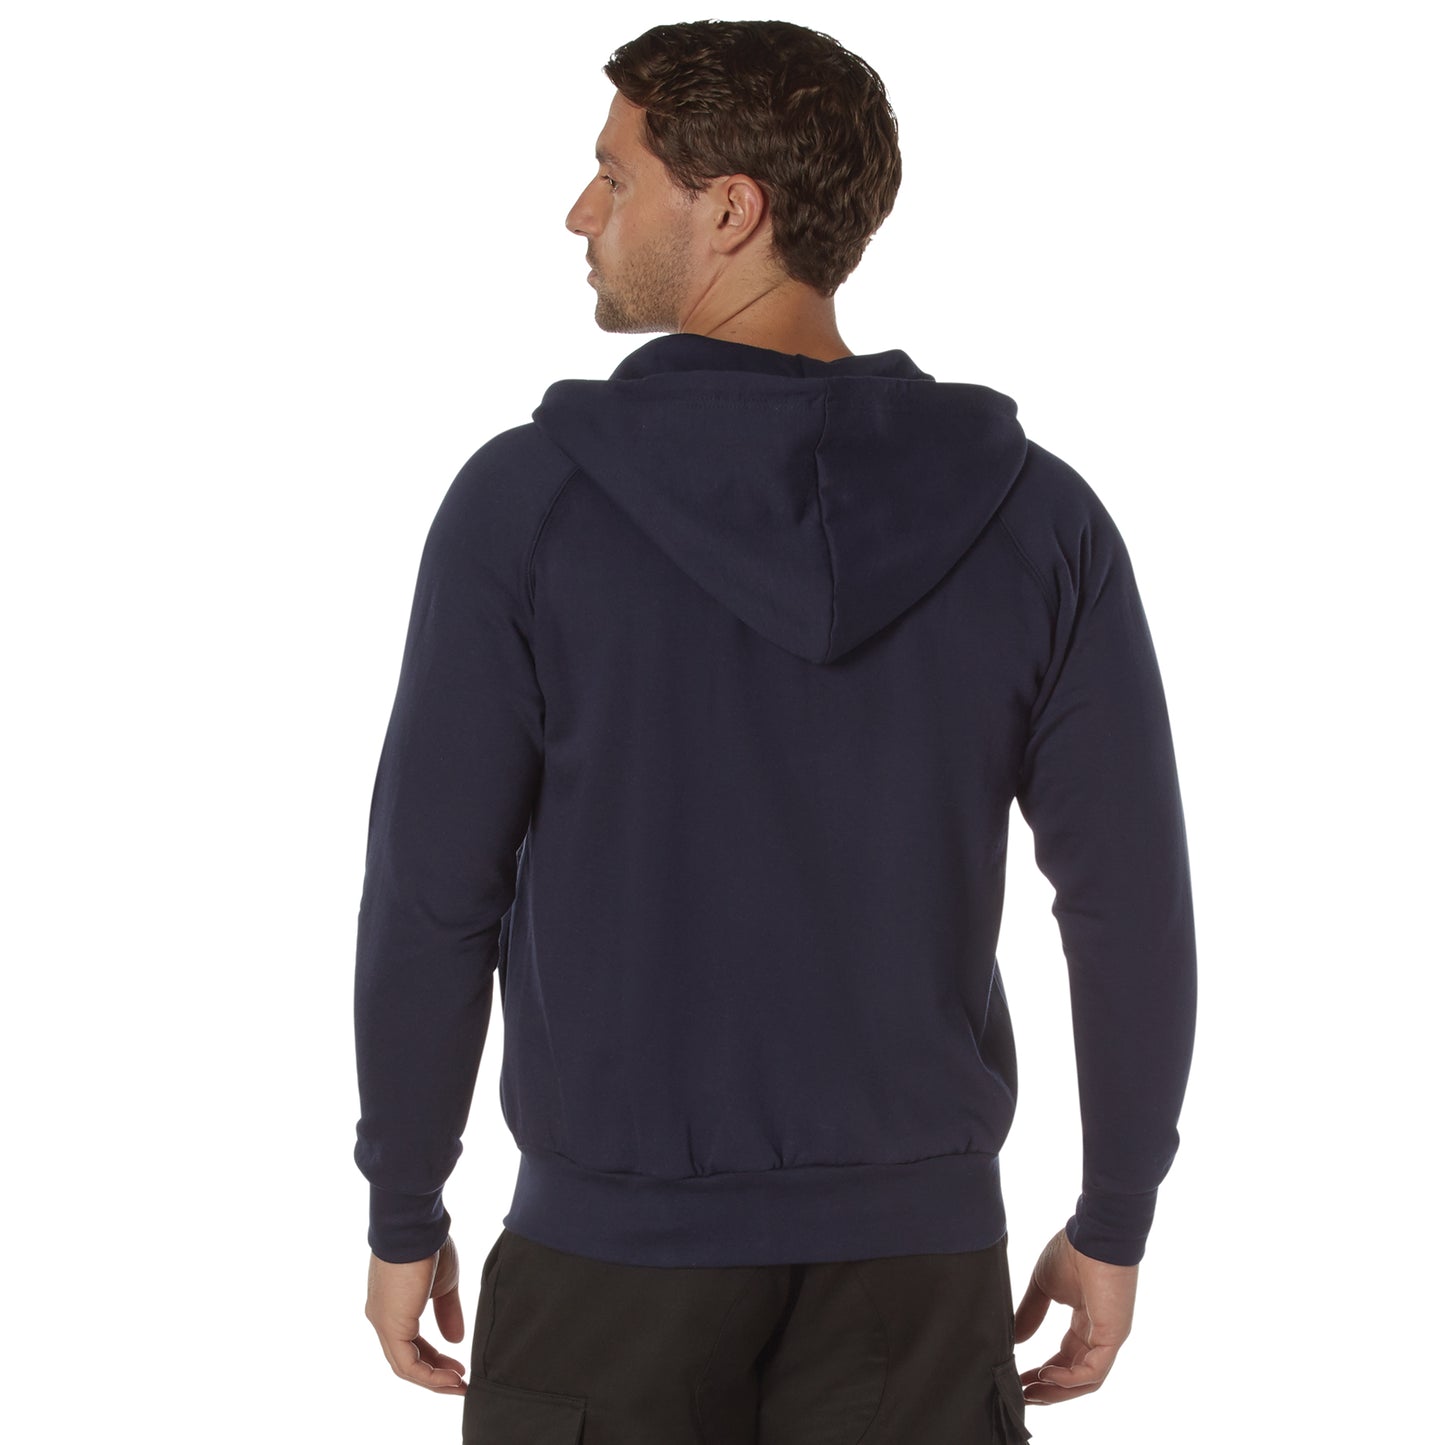 Rothco Thermal Lined Hooded Sweatshirt